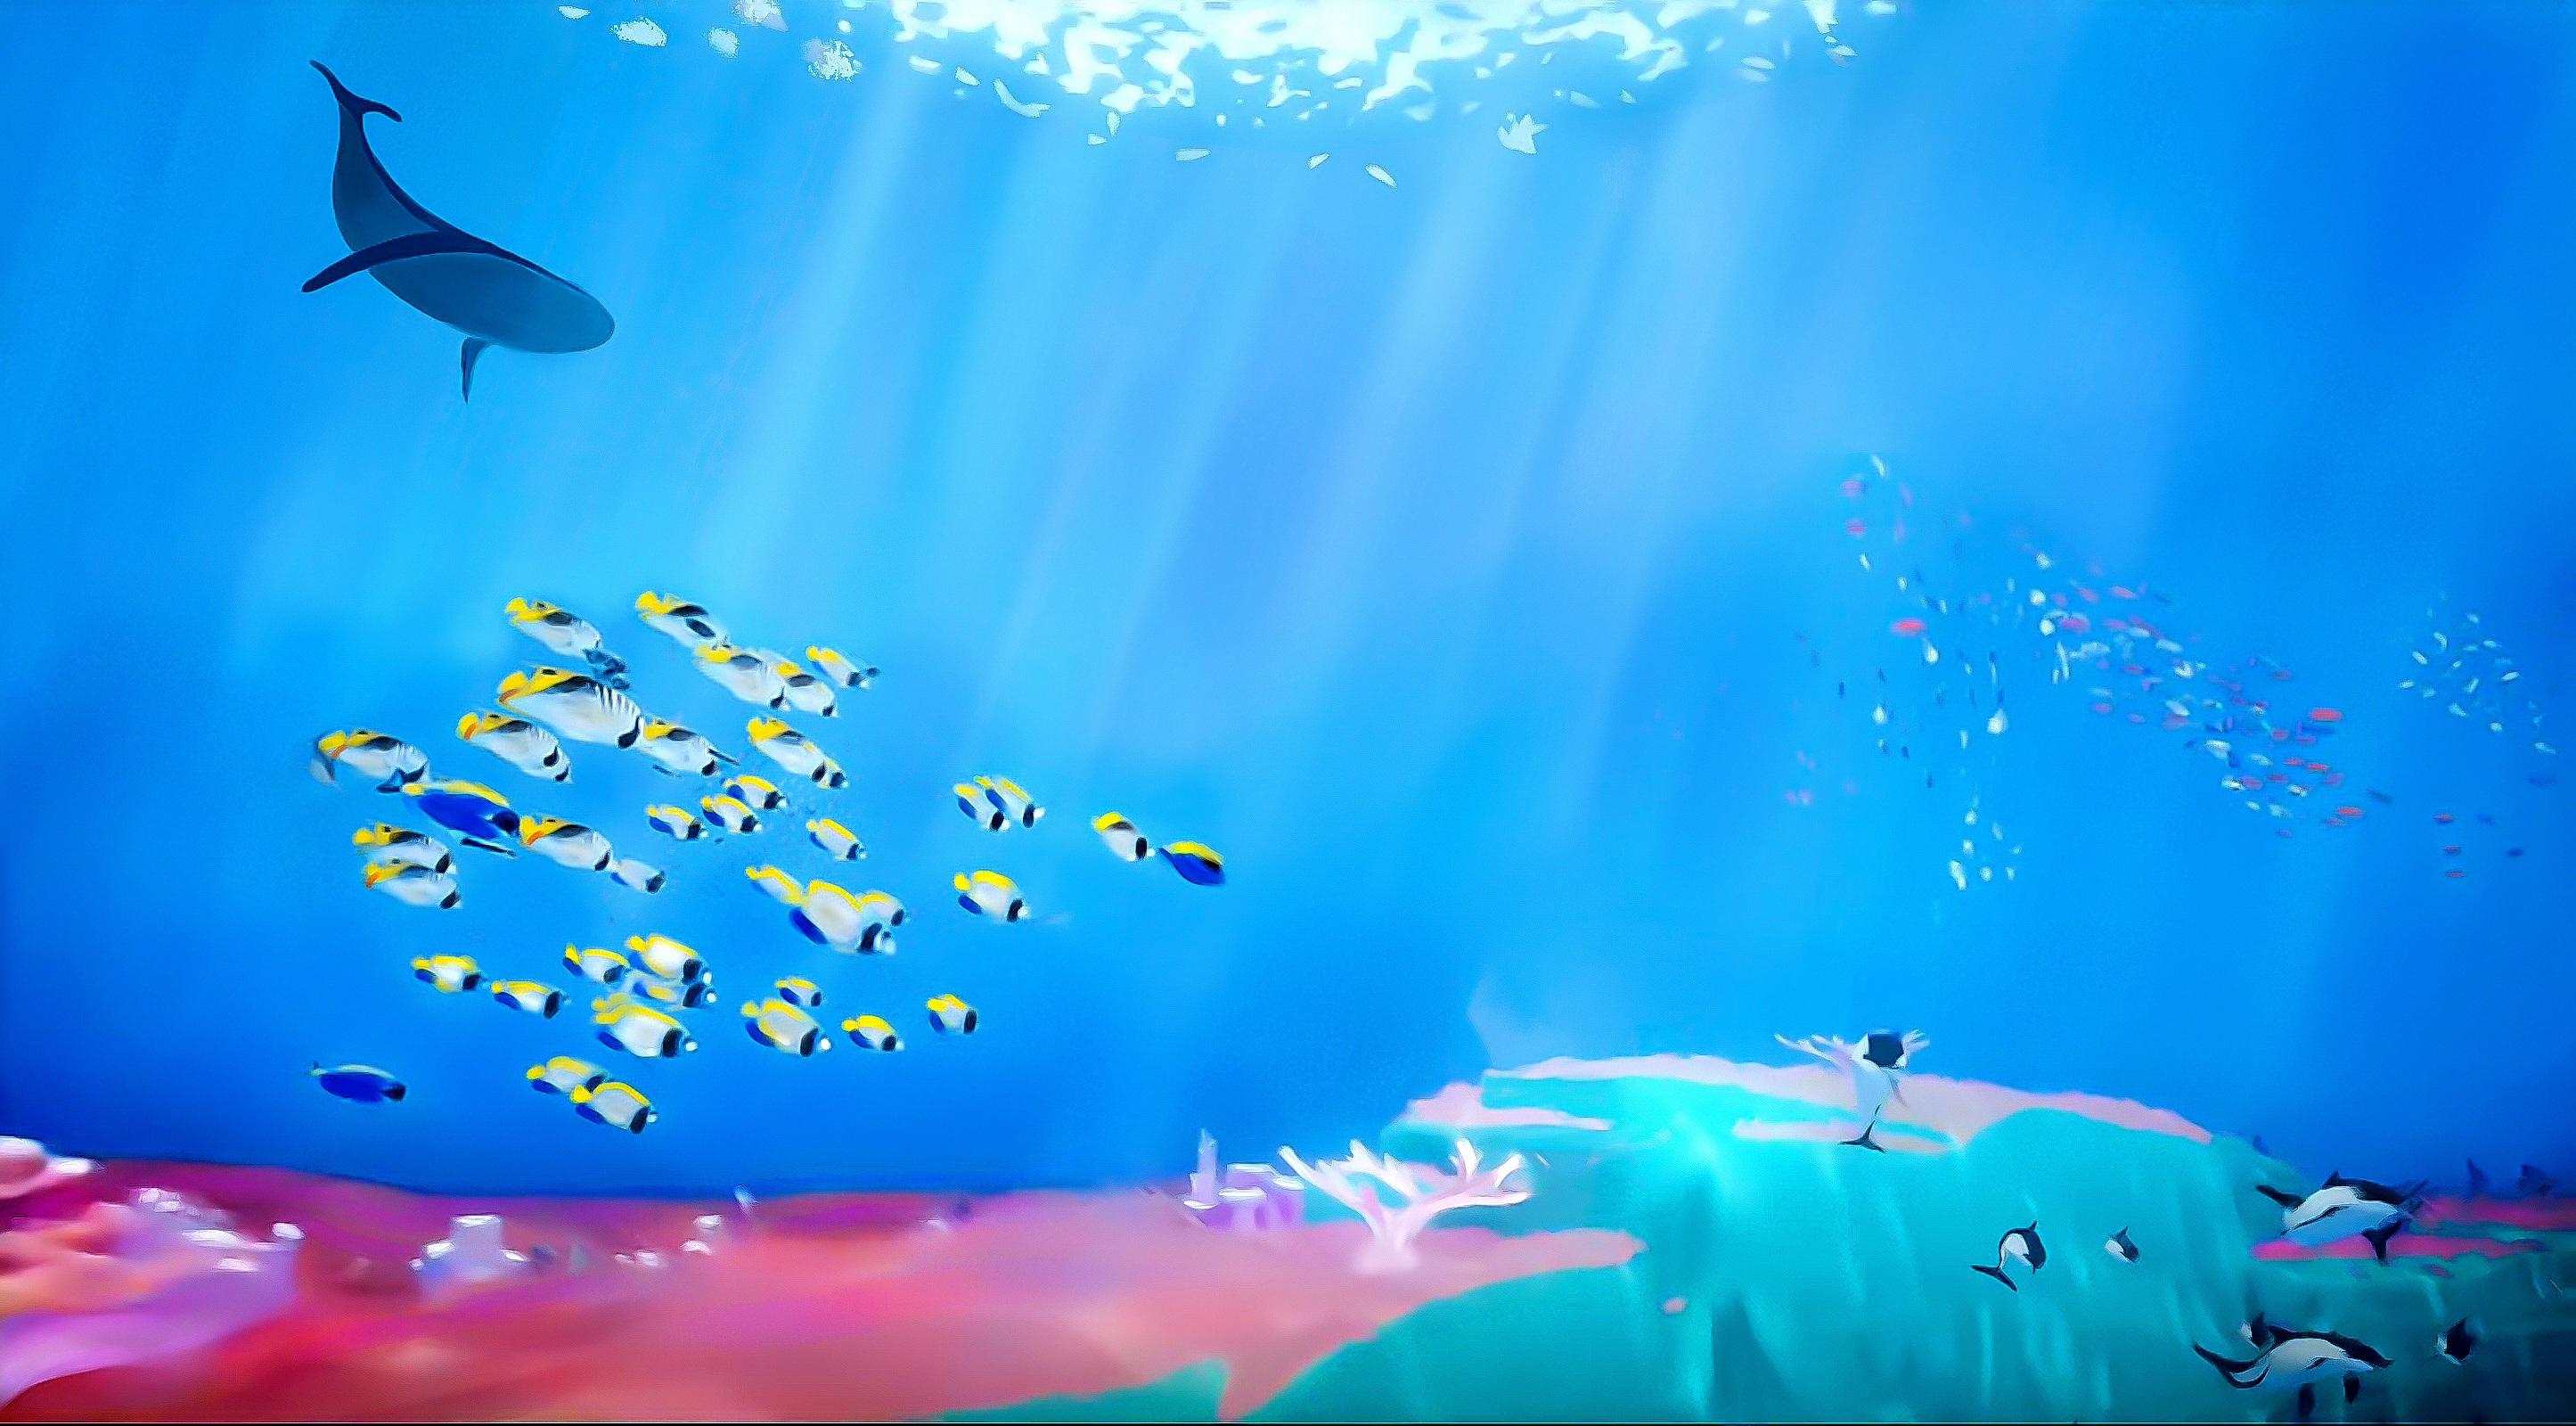 Underwater adventure with various sea animals.